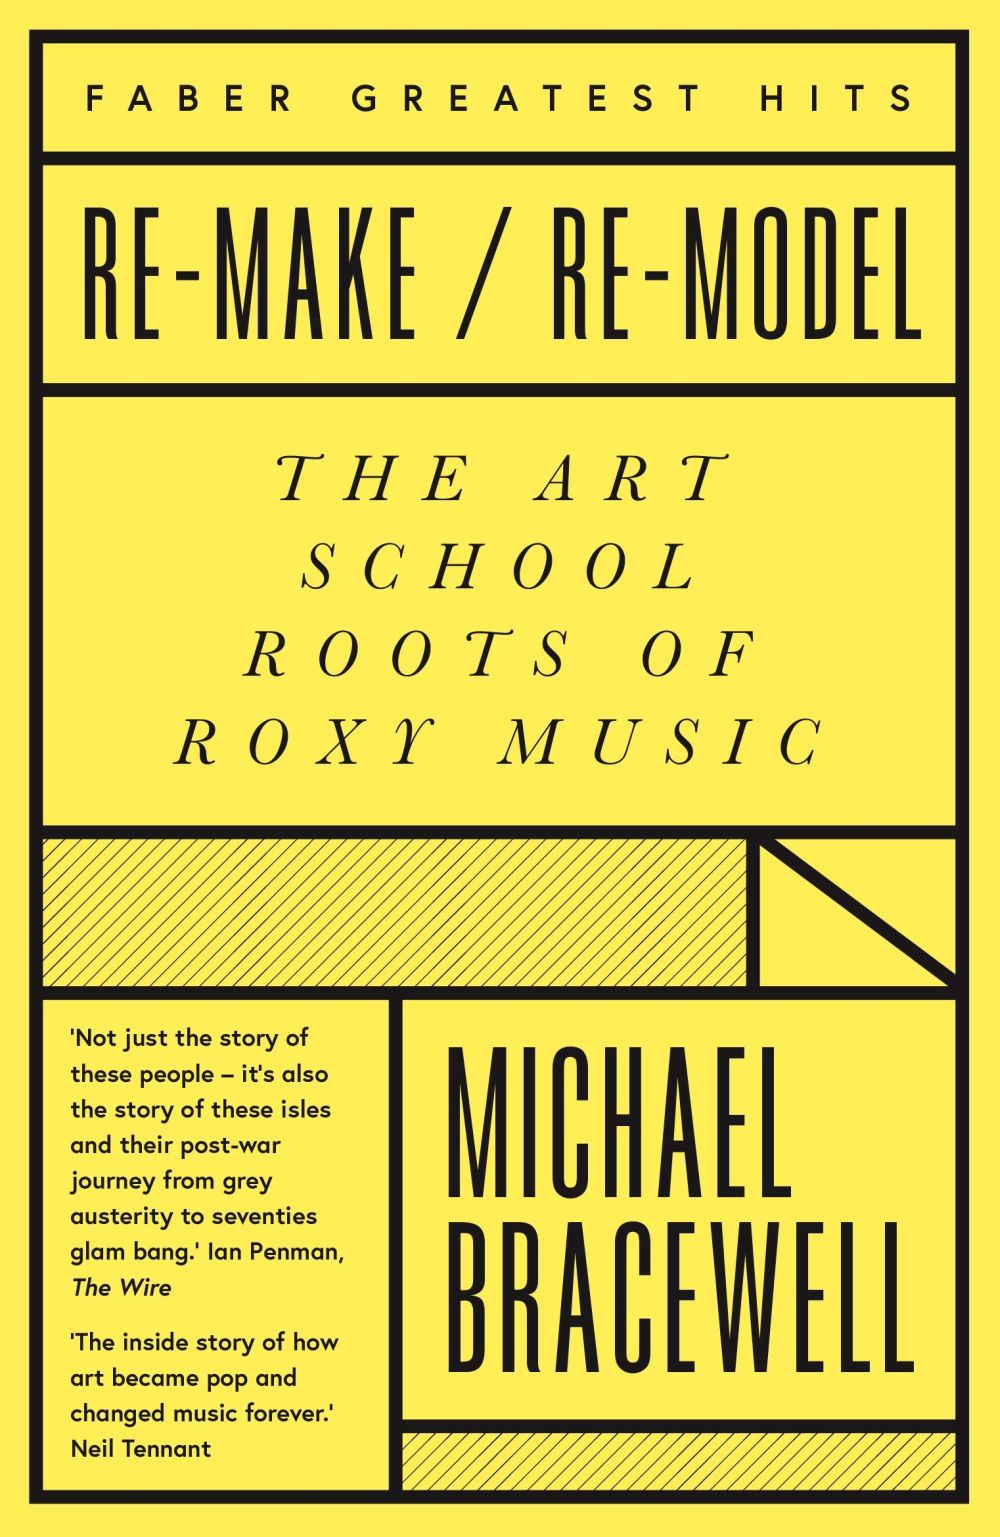 Roxy Music - Bracewell, Michael - Re-Make/Re-Model: The Art School Roots Of Roxy Music - Book - New